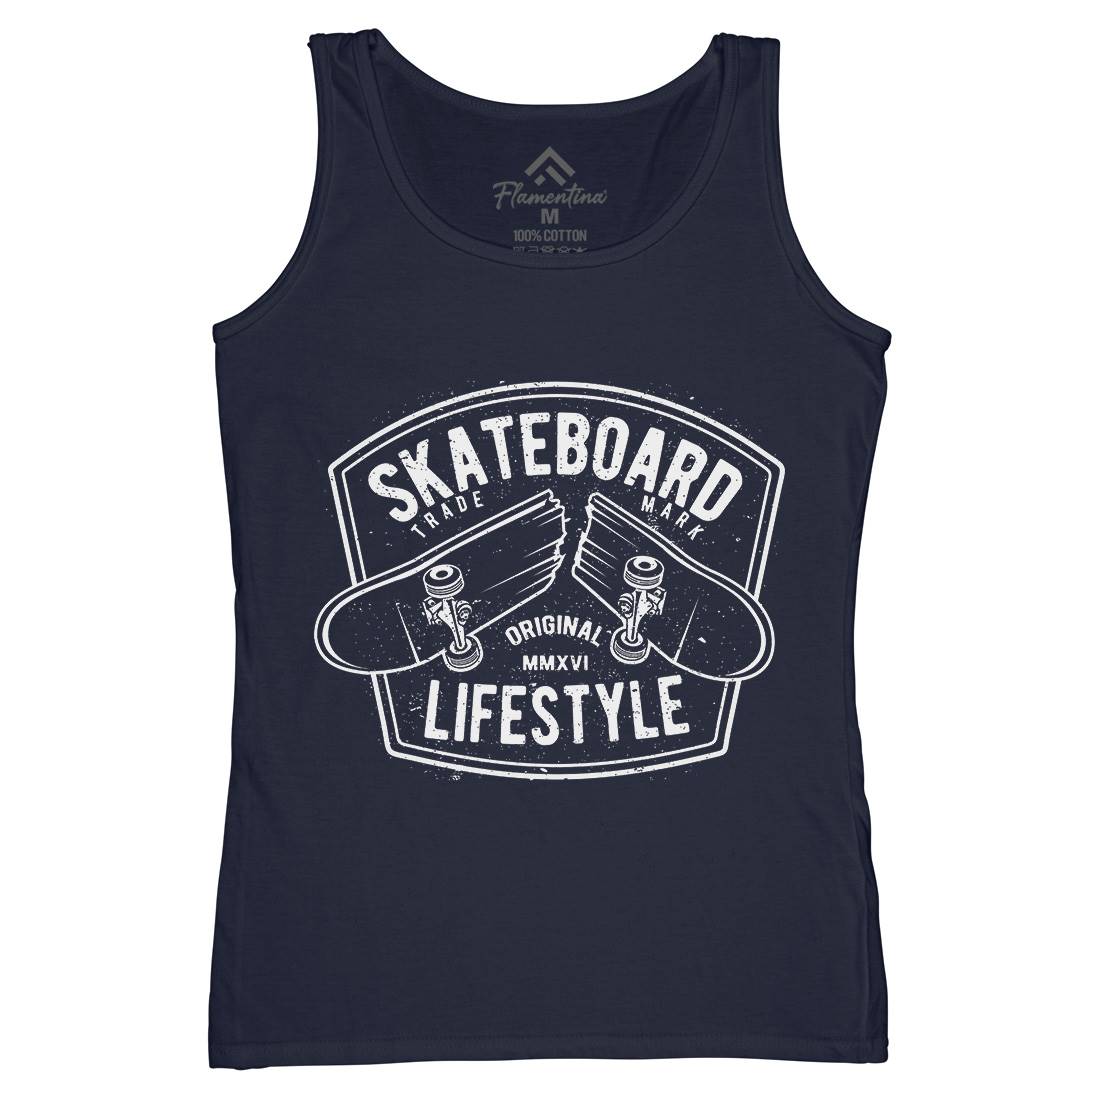 Skateboard Lifestyle Womens Organic Tank Top Vest Skate A145